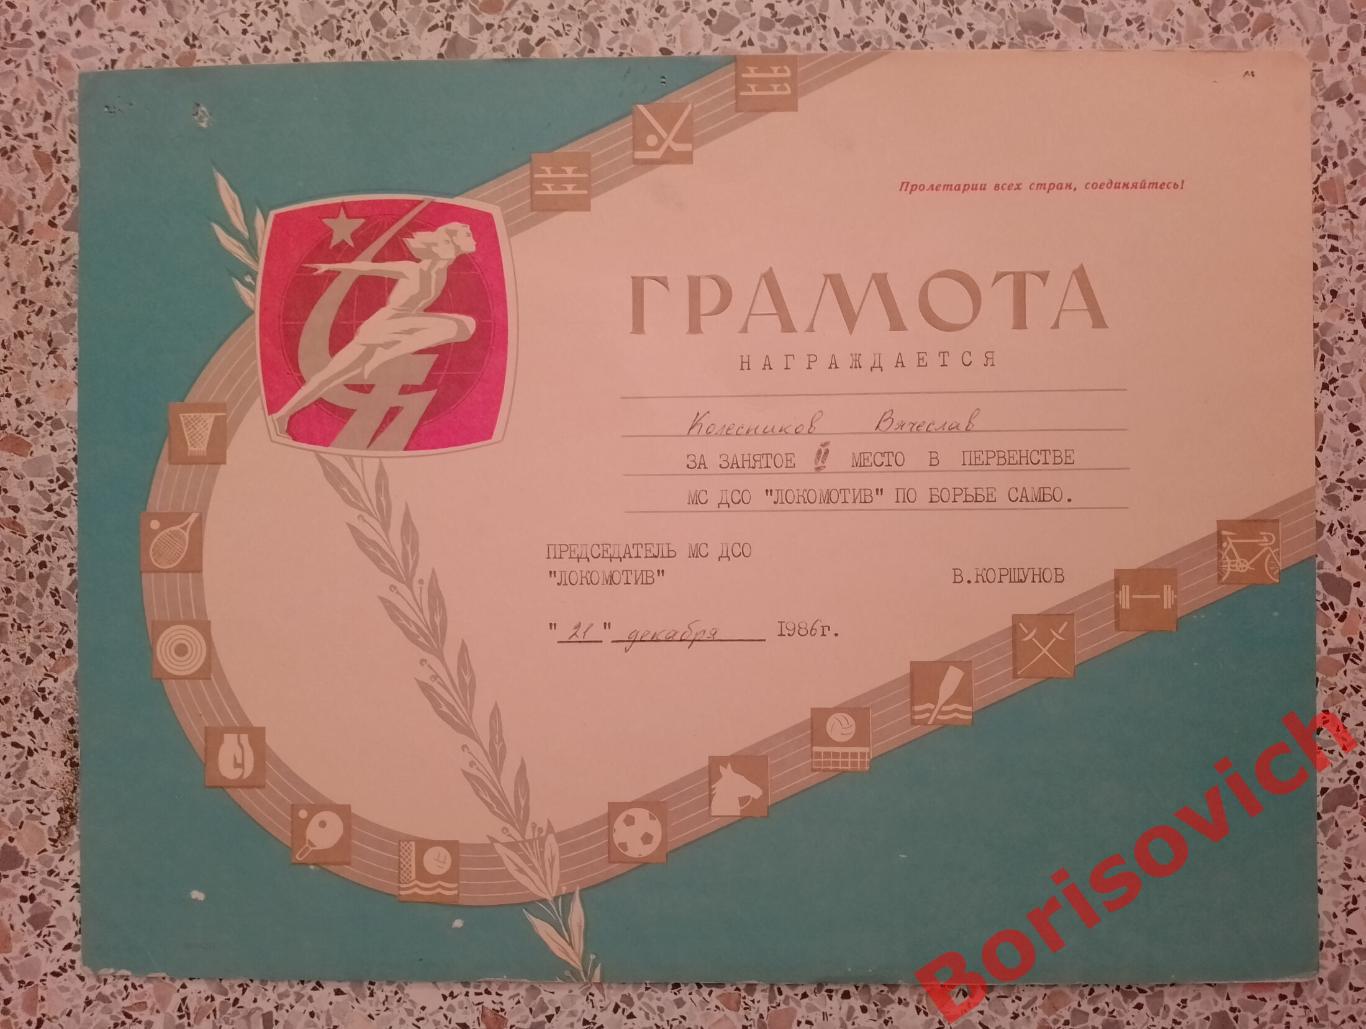 Грамота МС ДСО Локомотив Борьба самбо 1986